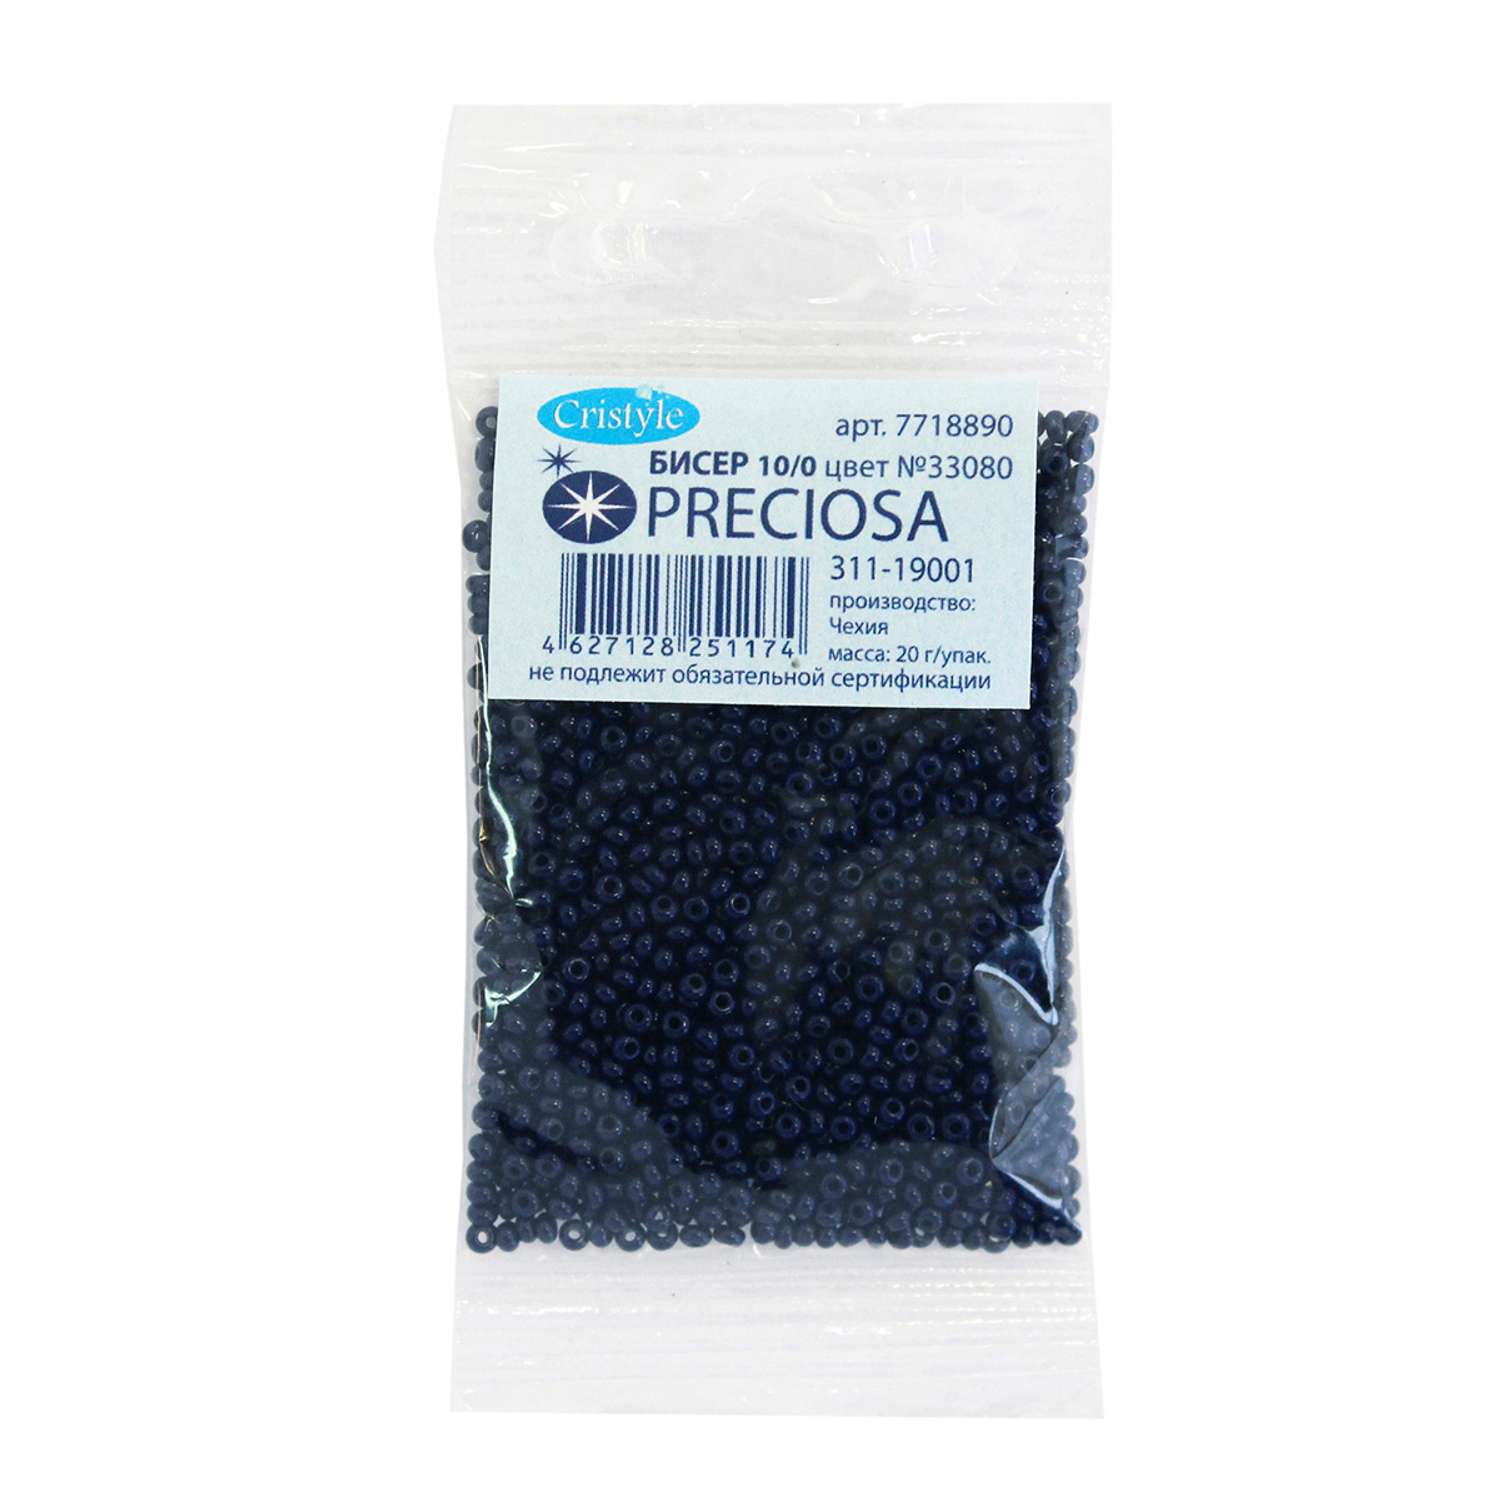 Бисер Preciosa чешский непрозрачный 10/0 20 гр Прециоза 33080 темно-синий - фото 1